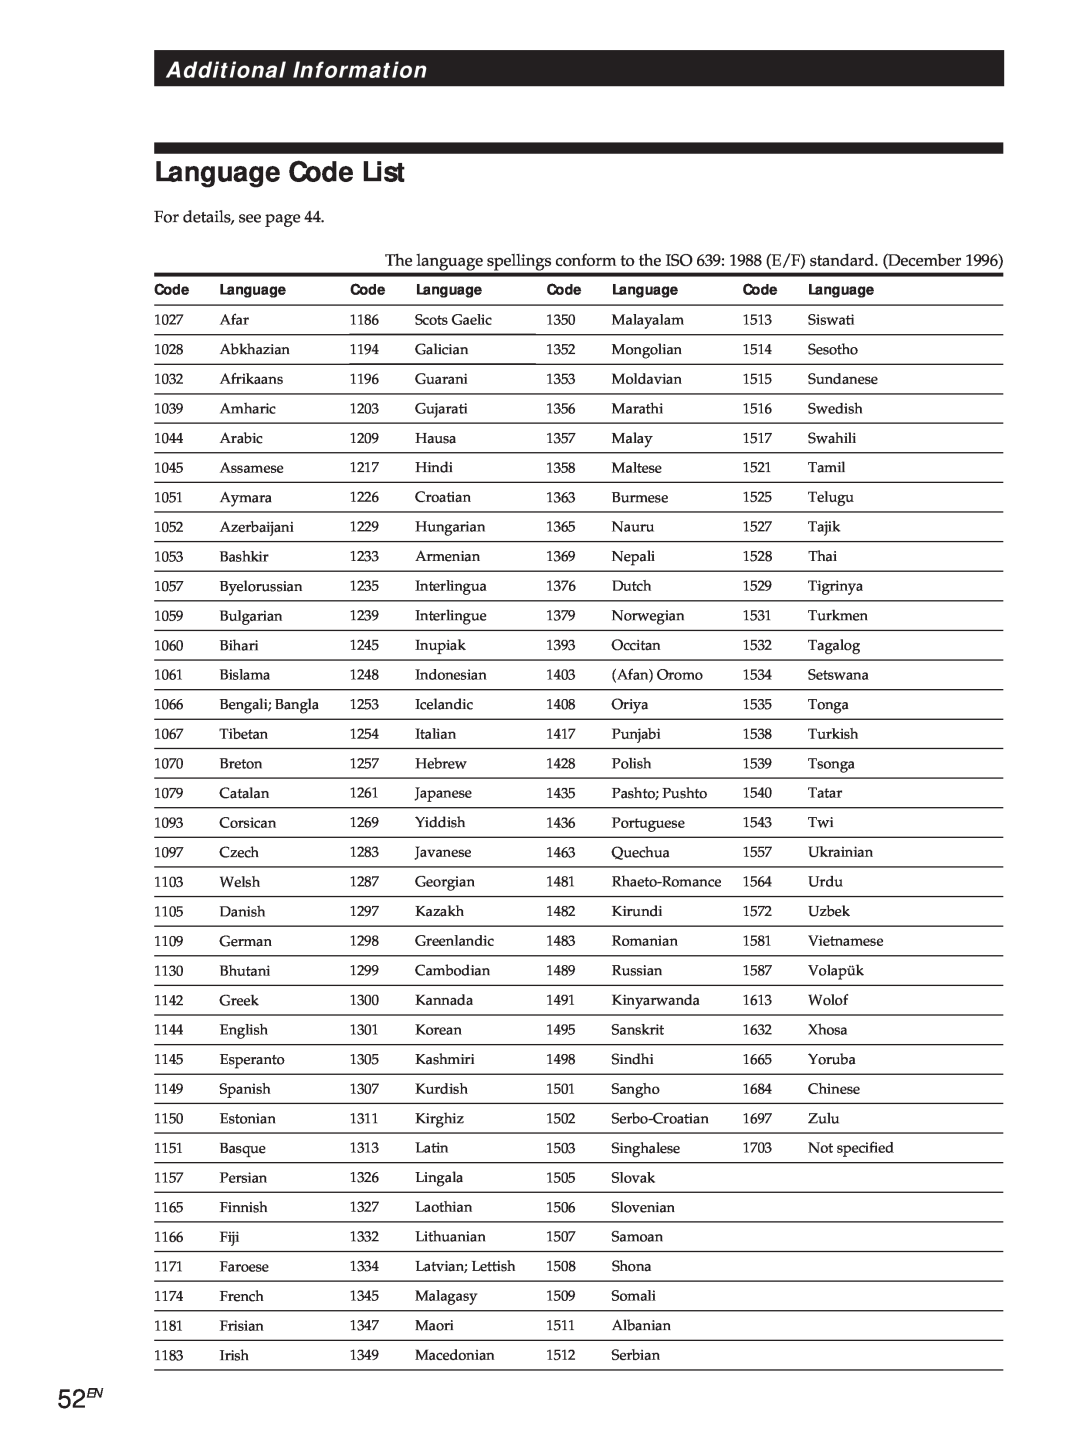 Sony DVP3980 manual Language Code List, 52EN, Additional Information 